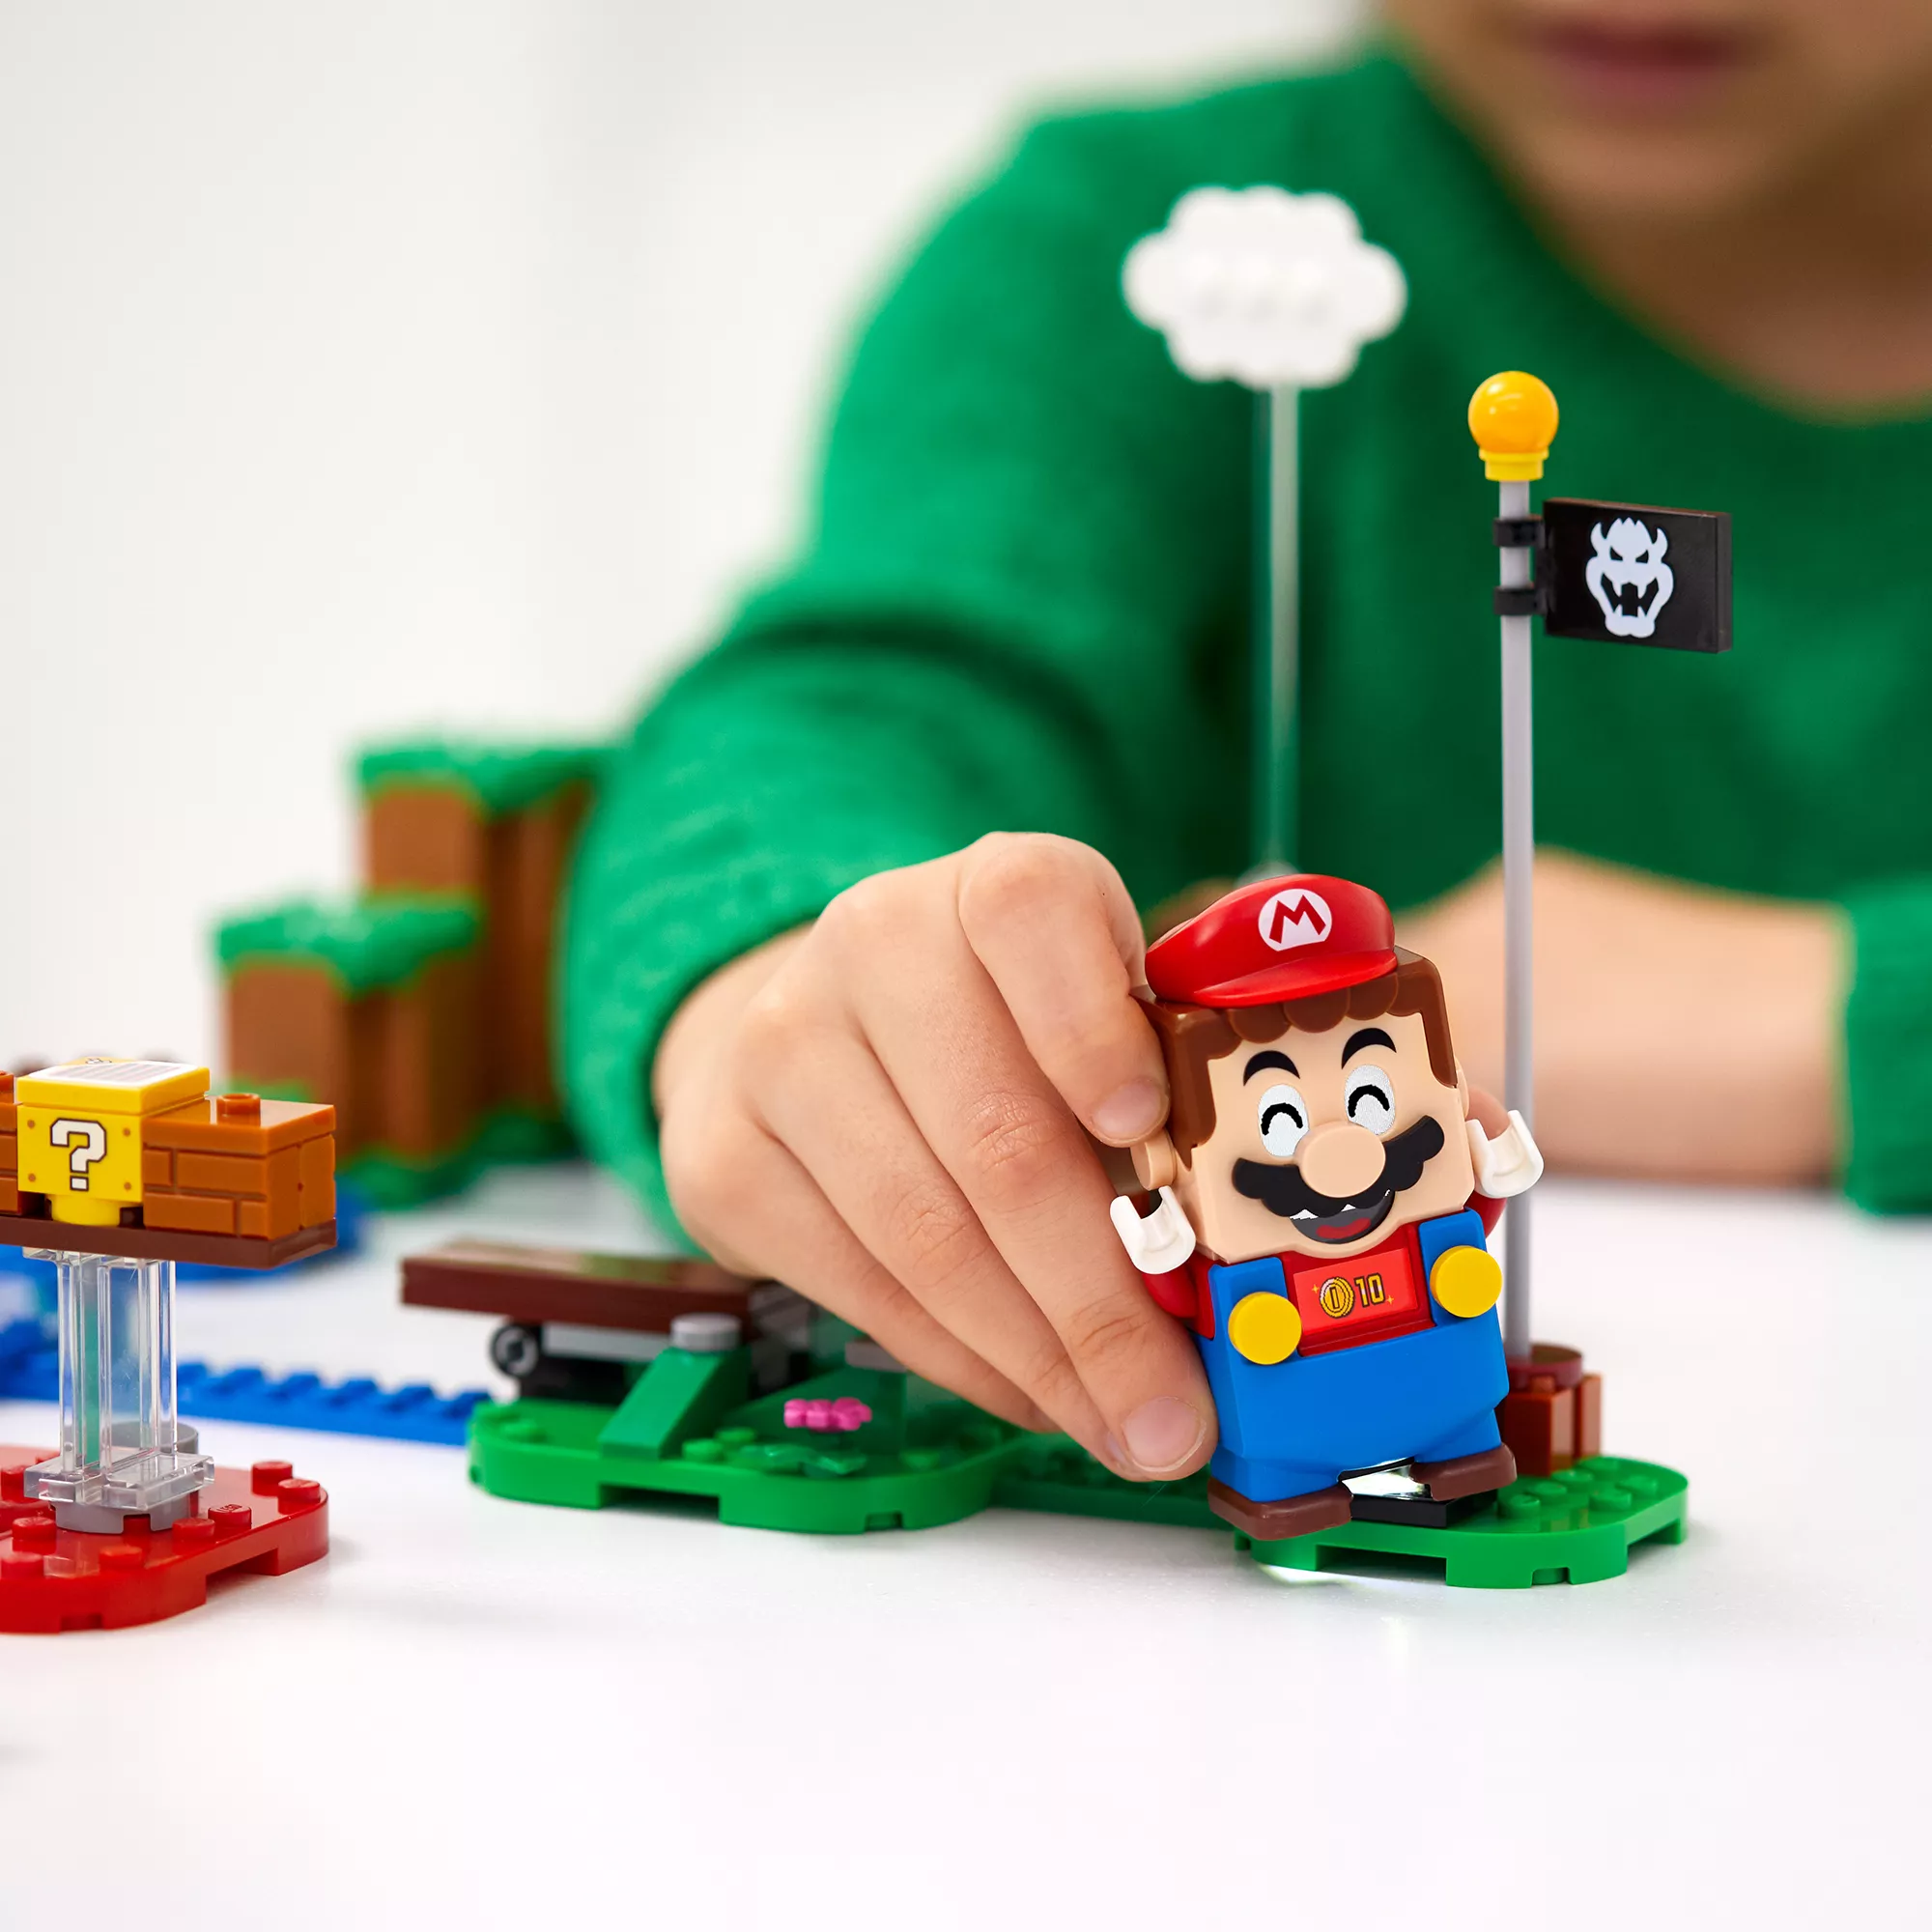 LEGO Super Mario Abenteuer mit Mario – Starterset